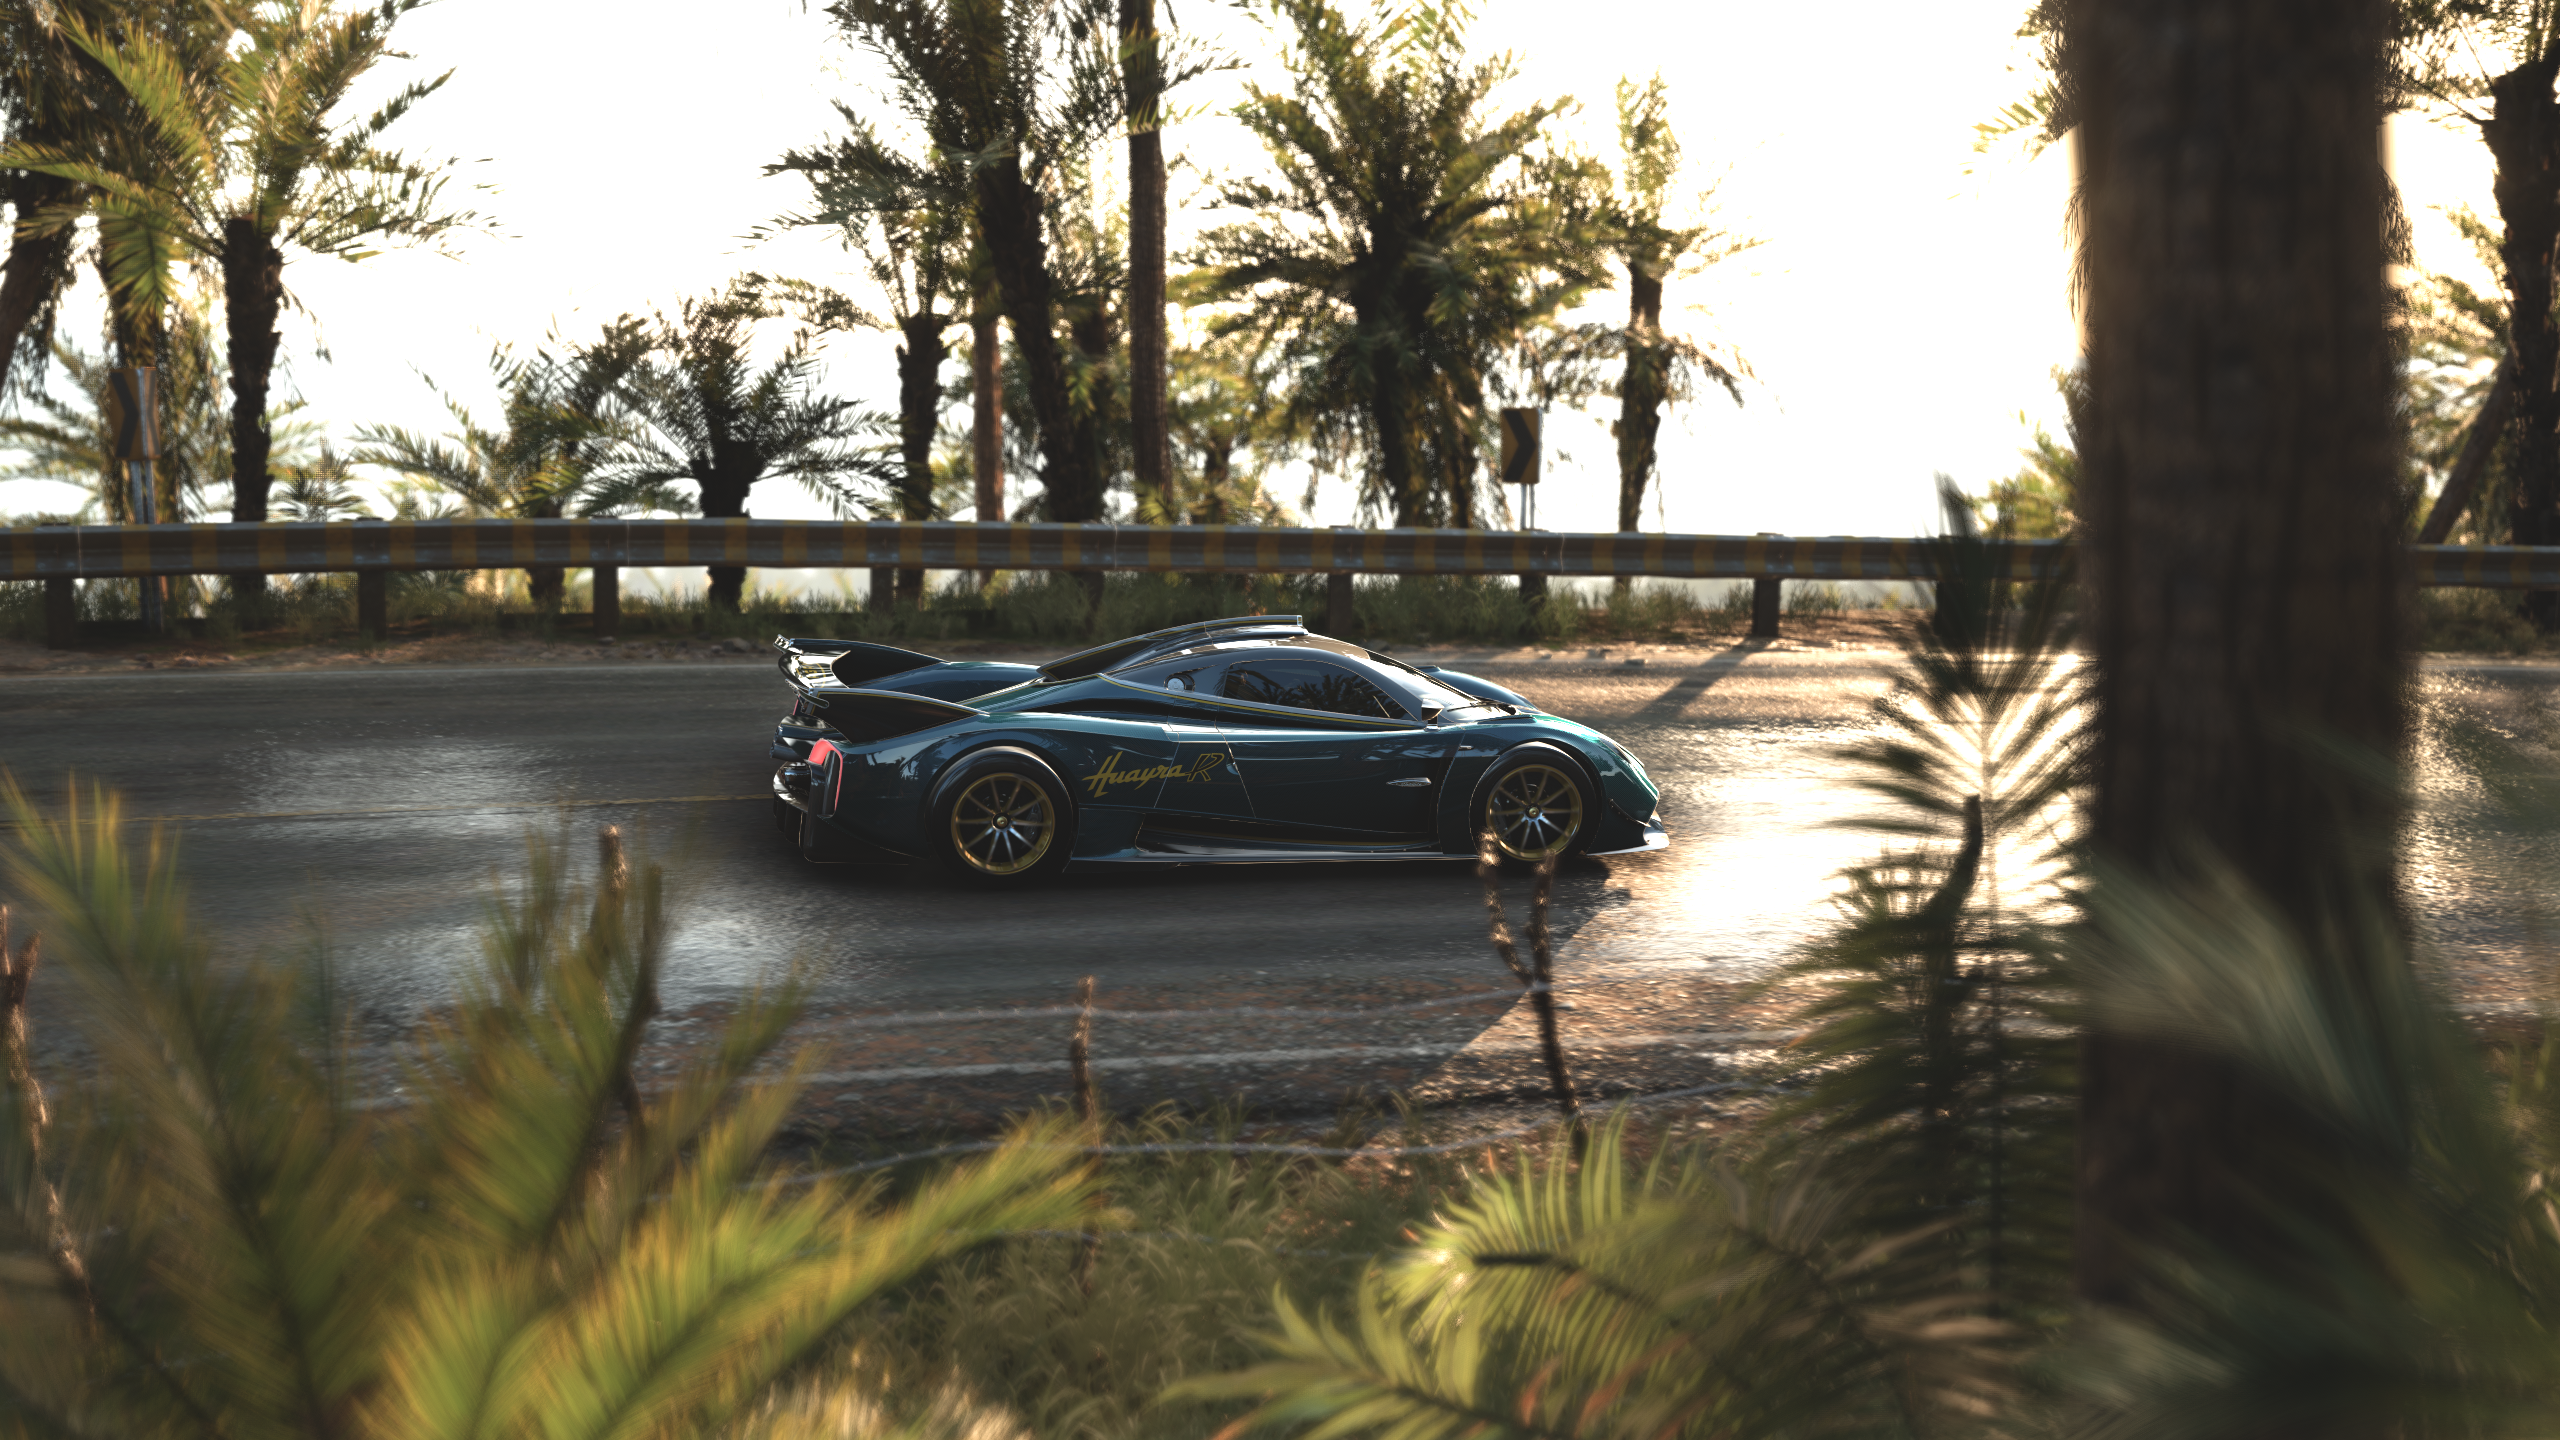 General 2560x1440 Forza Horizon 5 video games Pagani Huayra car side view taillights CGI road trees